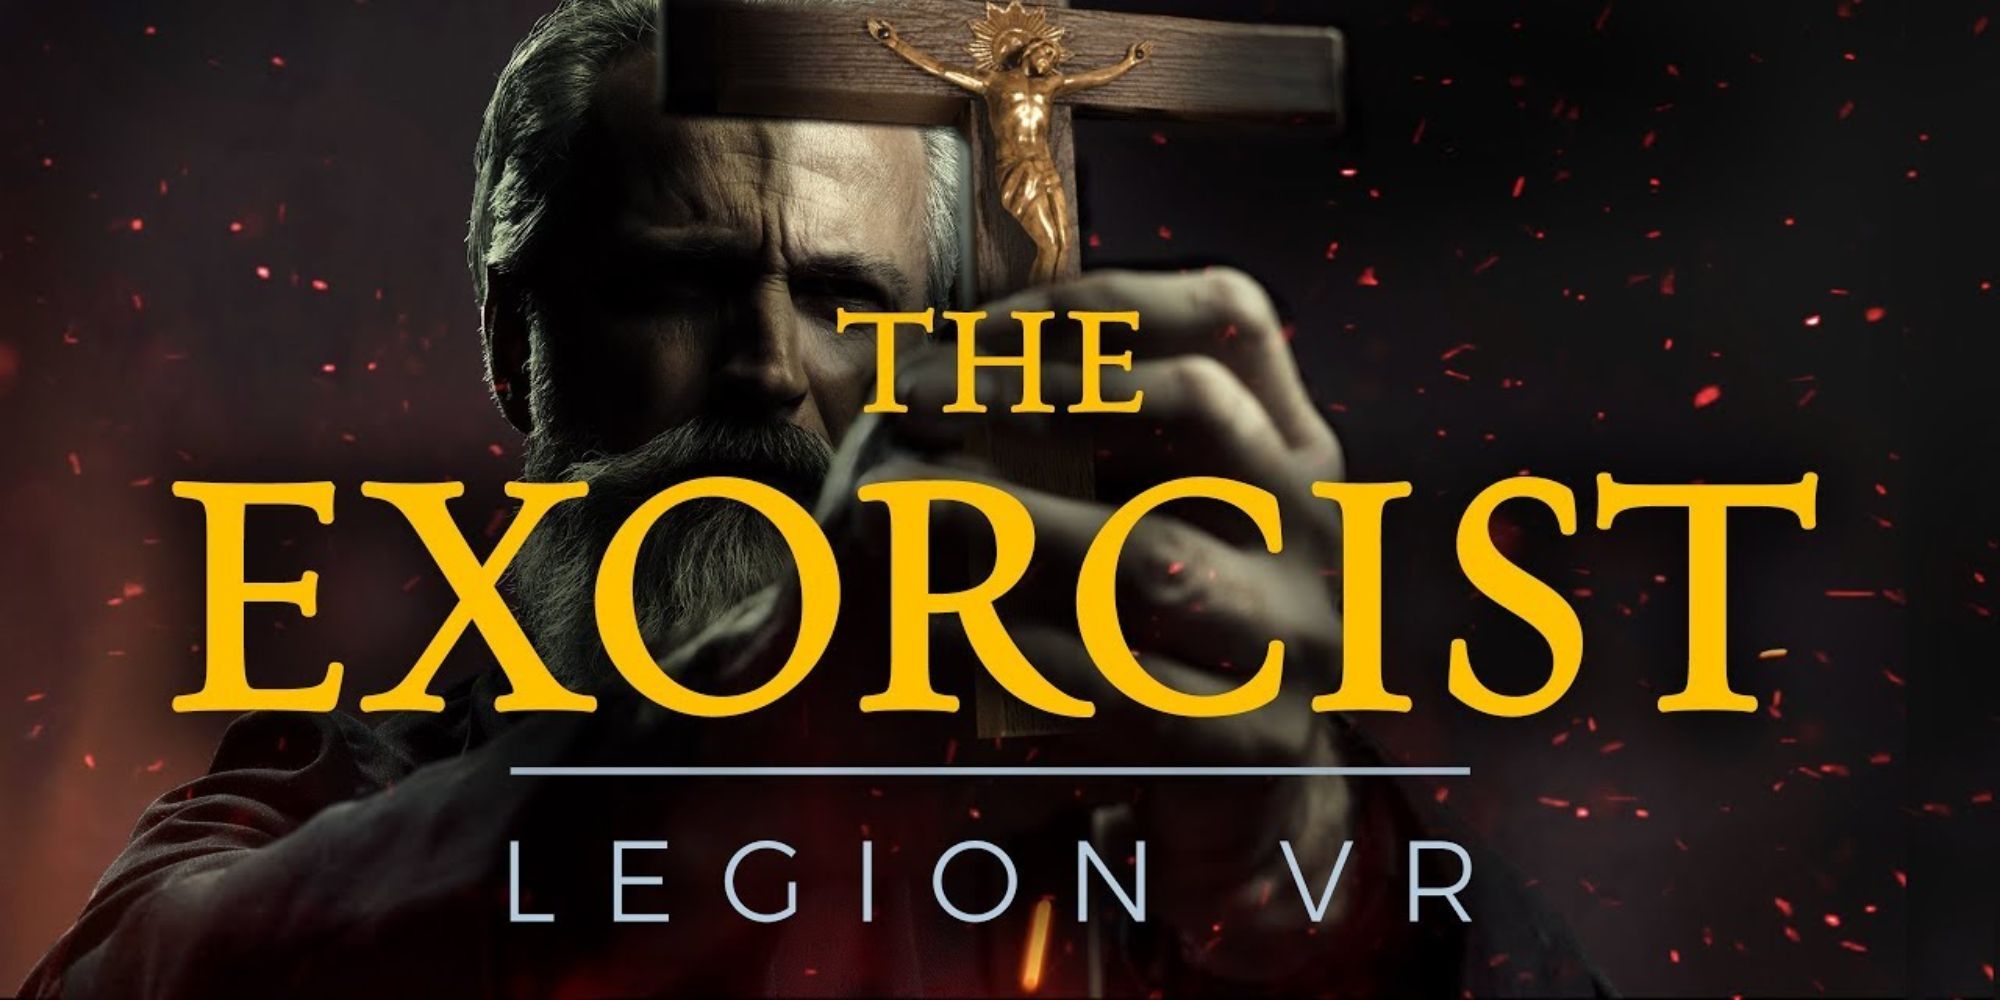 exorcist legion vr (1)